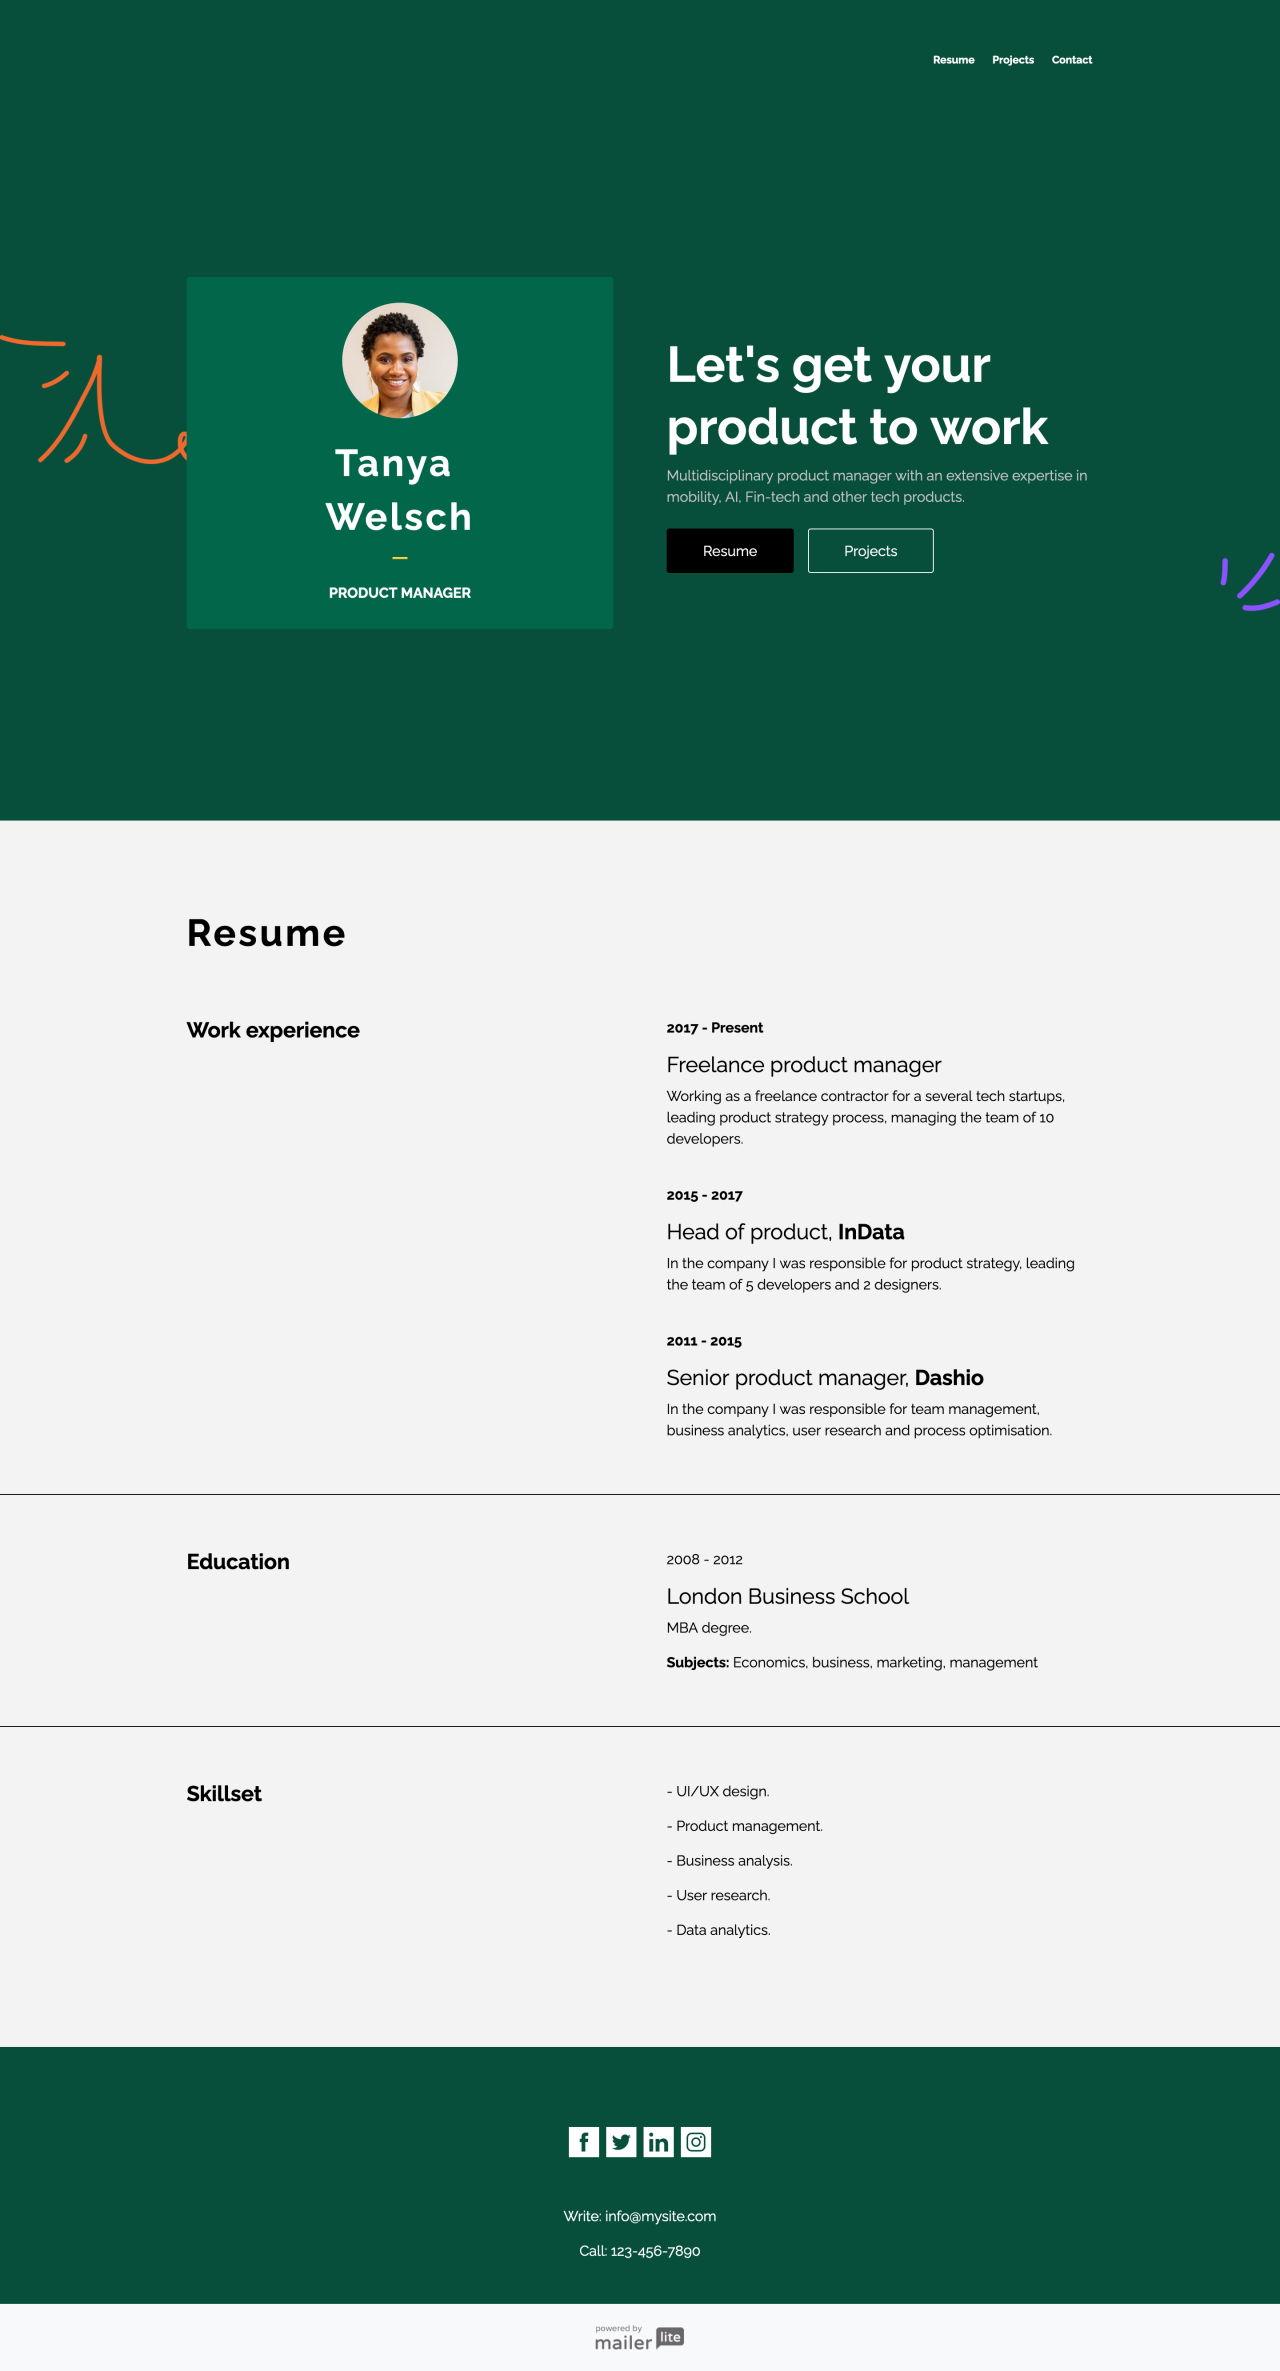 Modern CV or resume template - Made by MailerLite